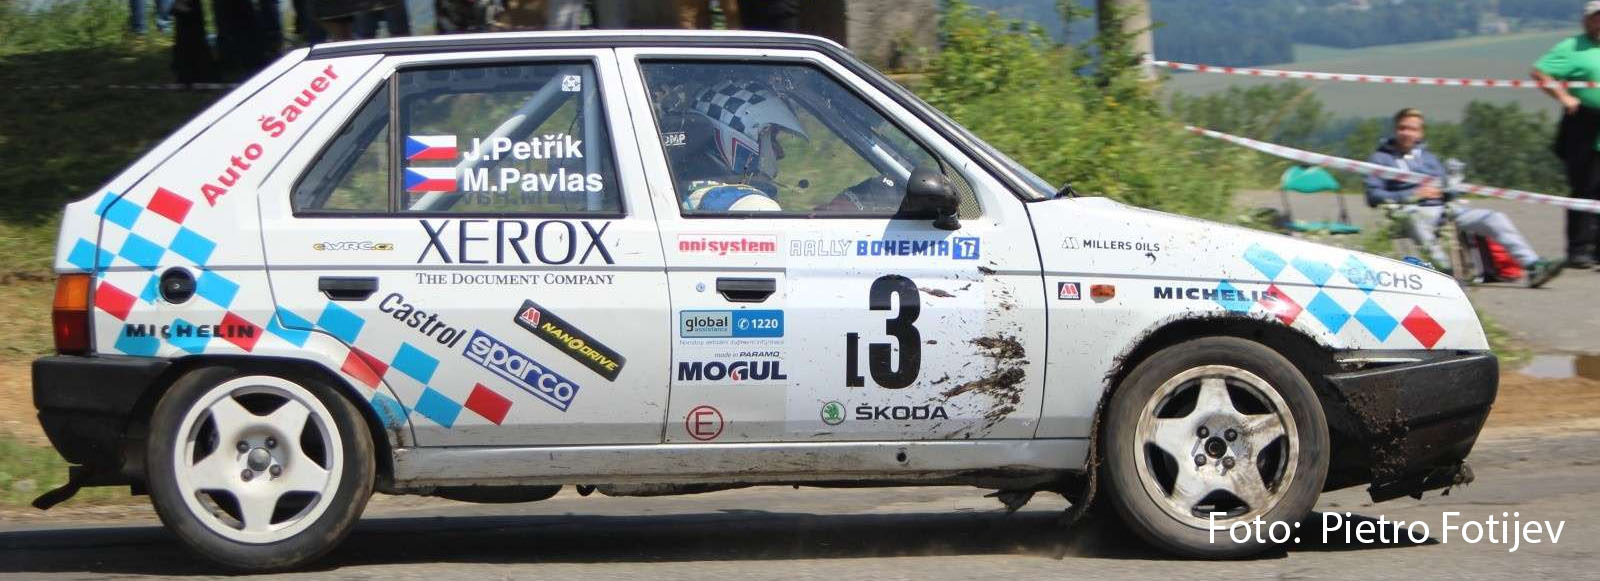 Rally Legend